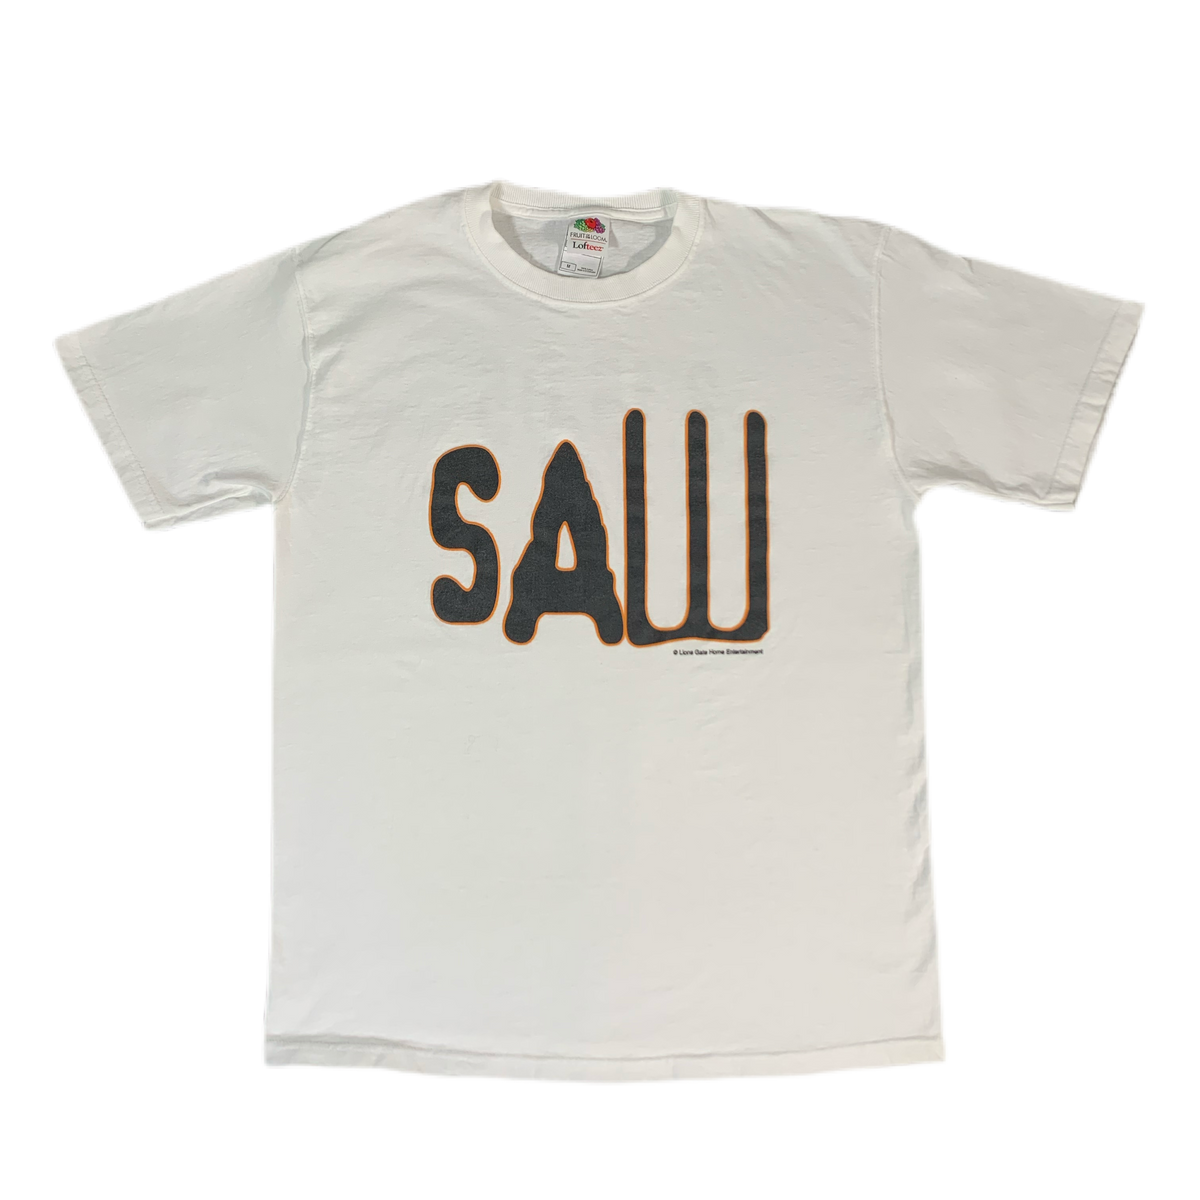 Vintage SAW “2.15.05” T-Shirt